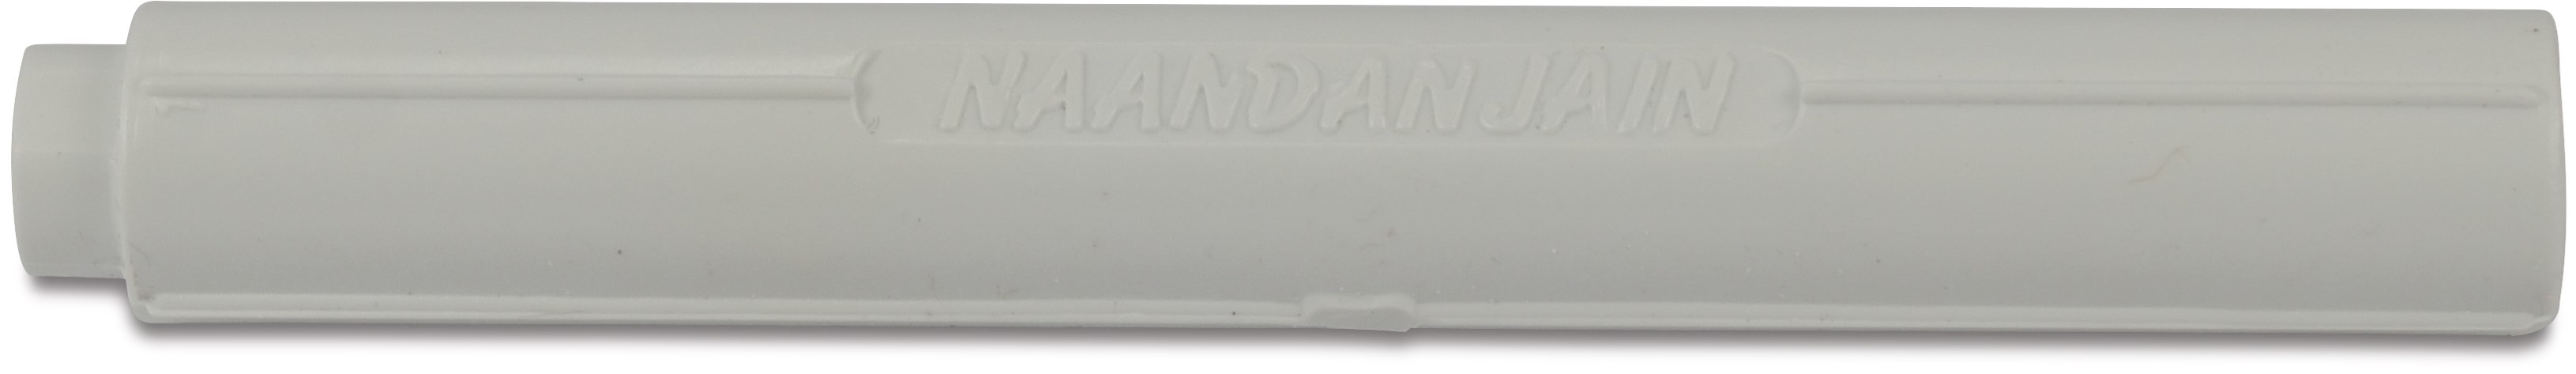 NaanDanJain Stabilisator für Mikroschlauch 7mm